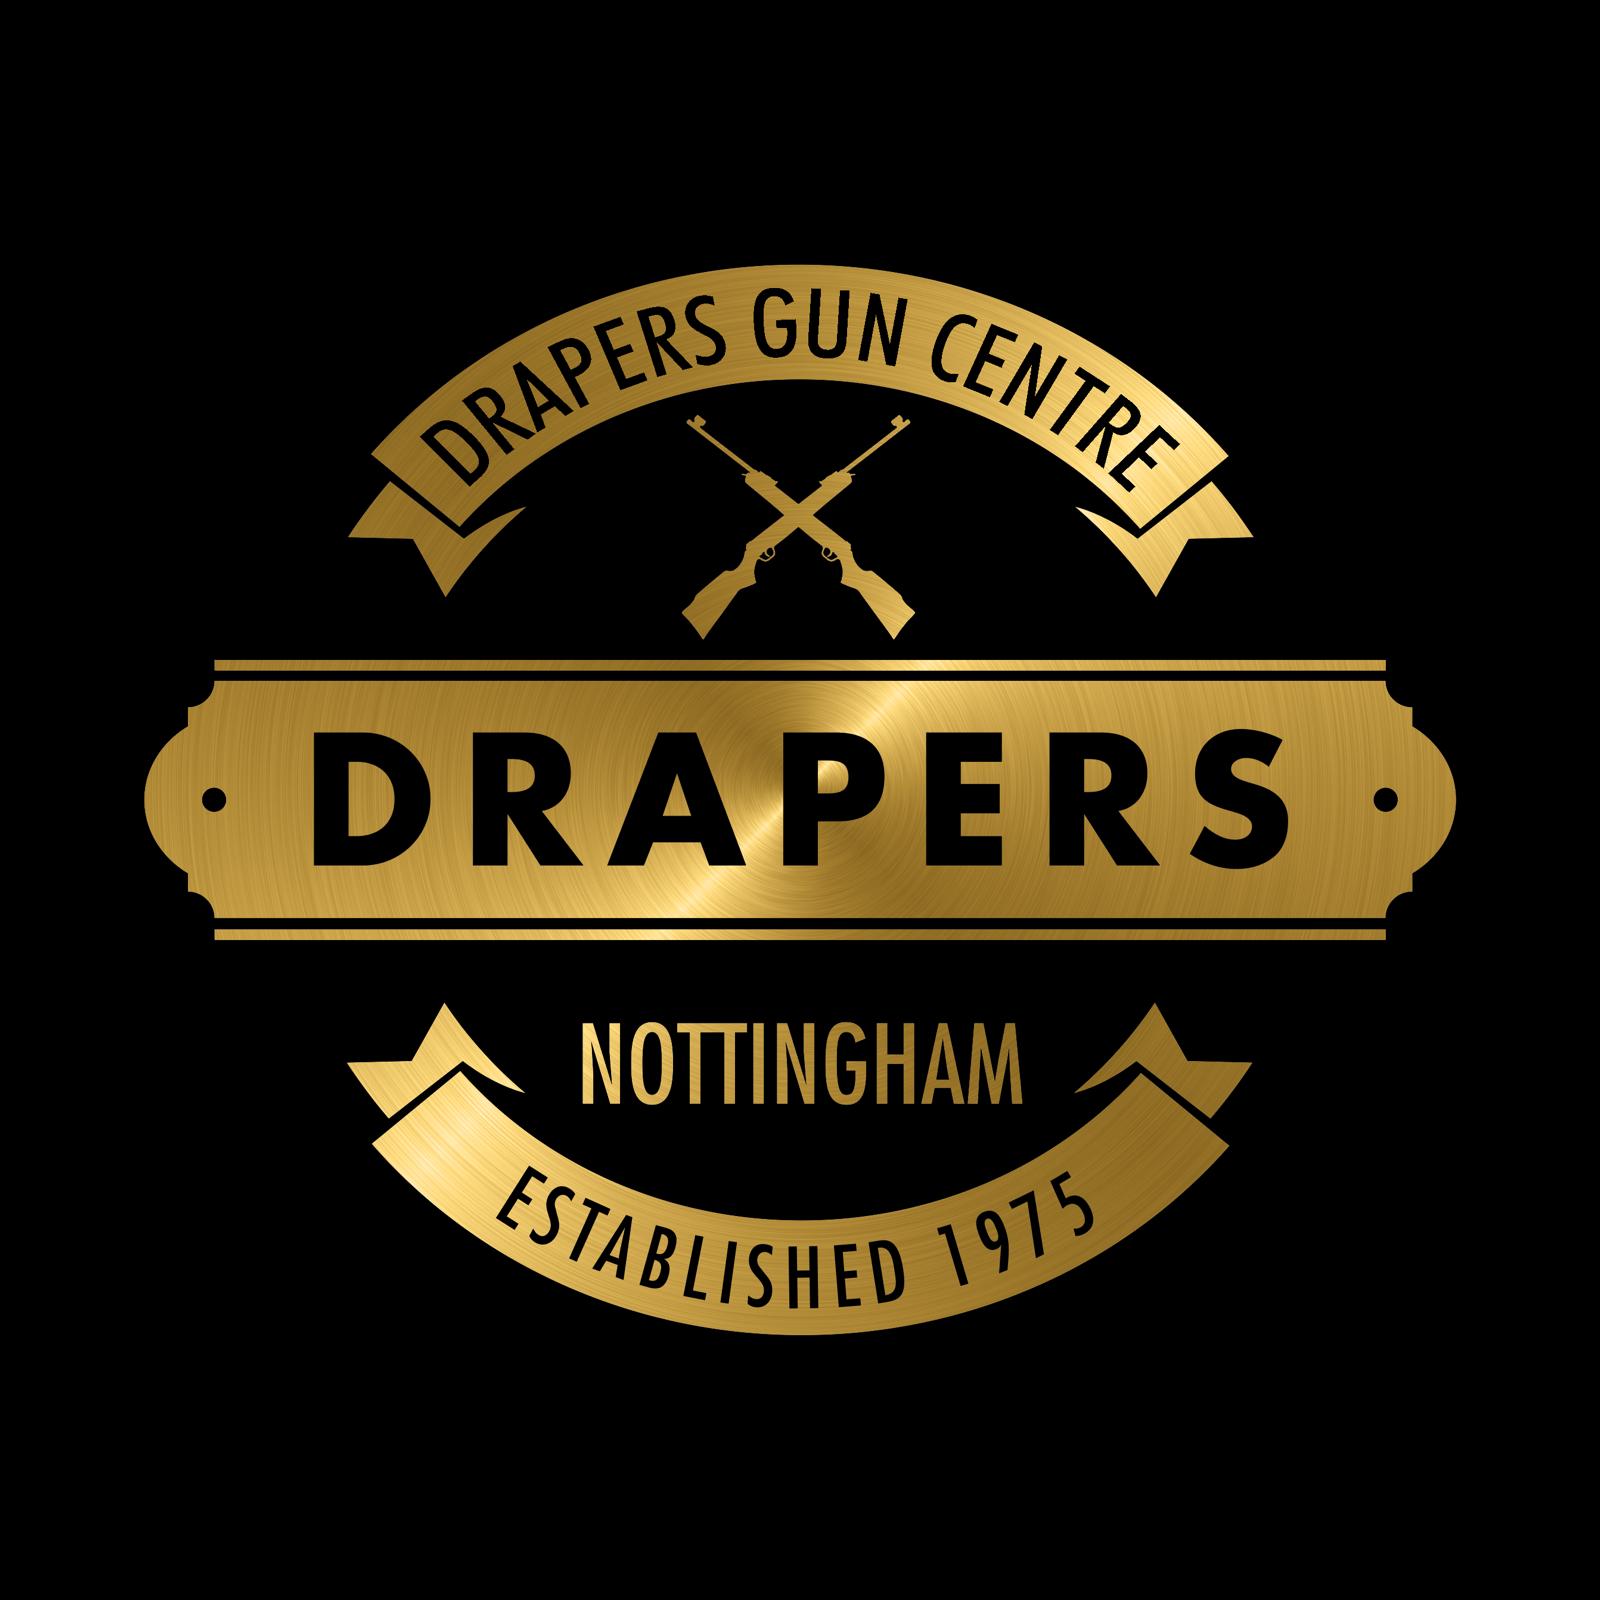 Drapers Gun Centre LTD